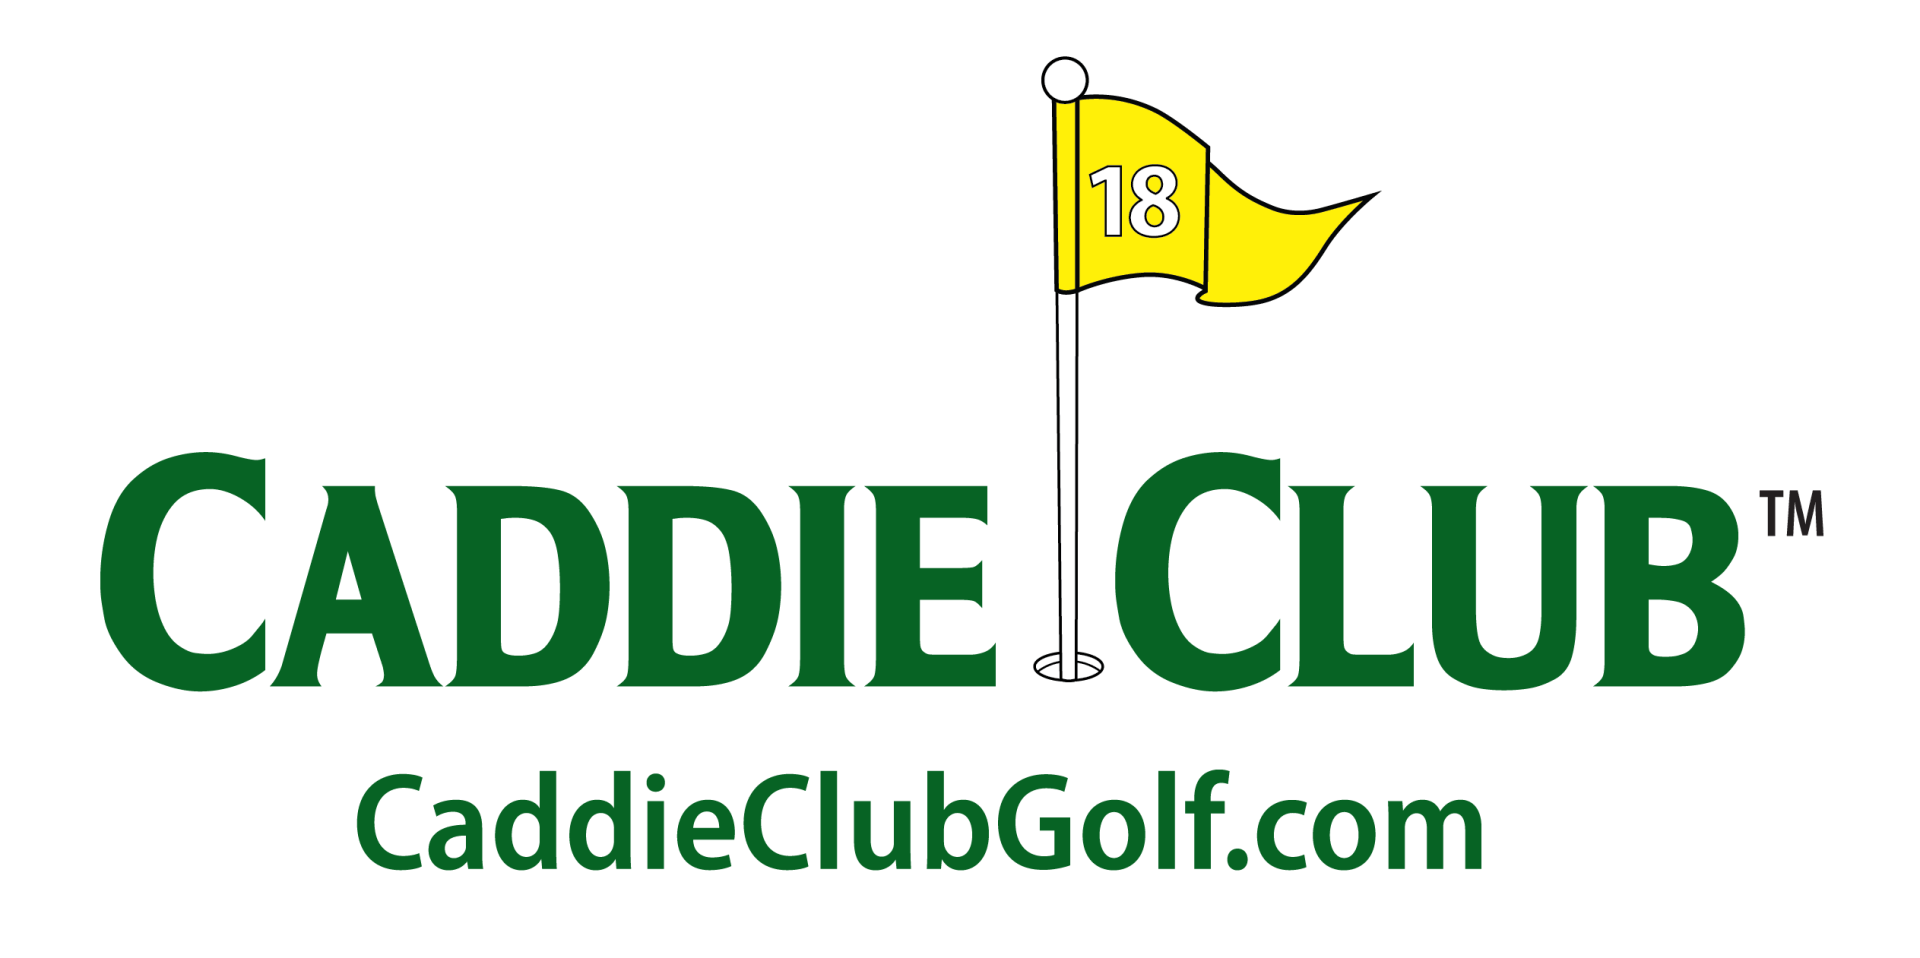 A logo for caddie club golf with a yellow flag